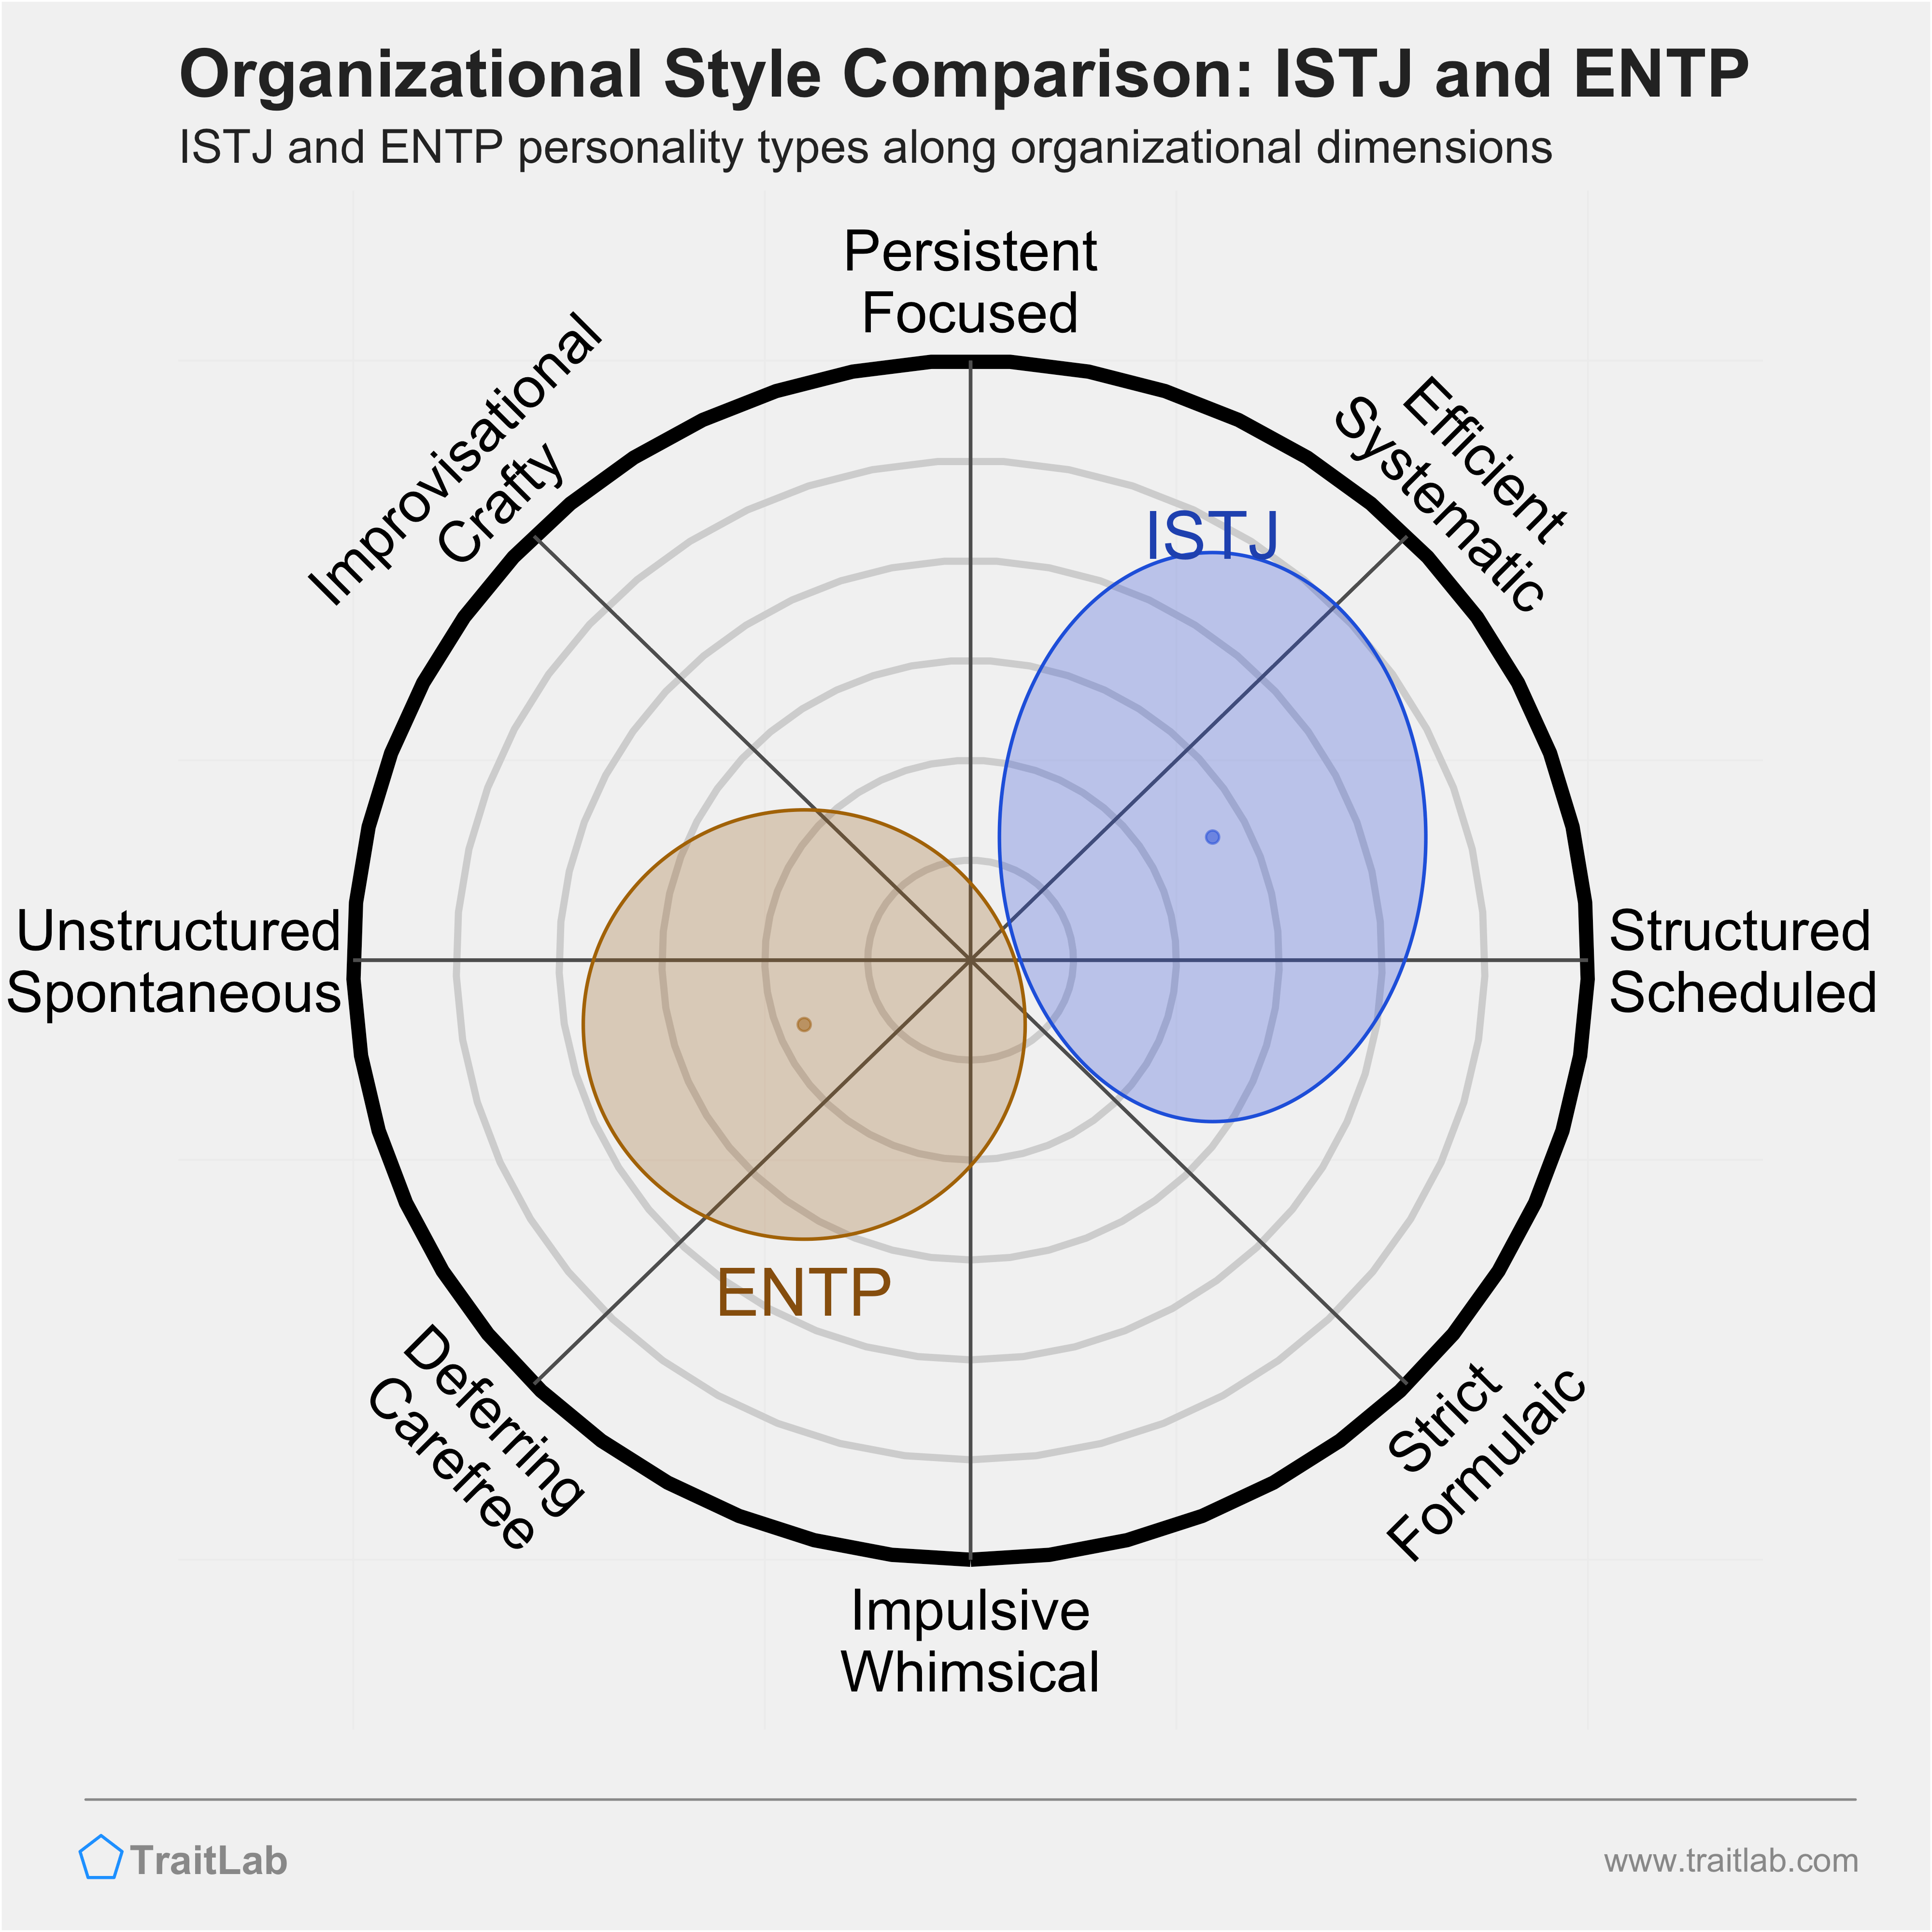 ISTJ and ENTP comparison across organizational dimensions